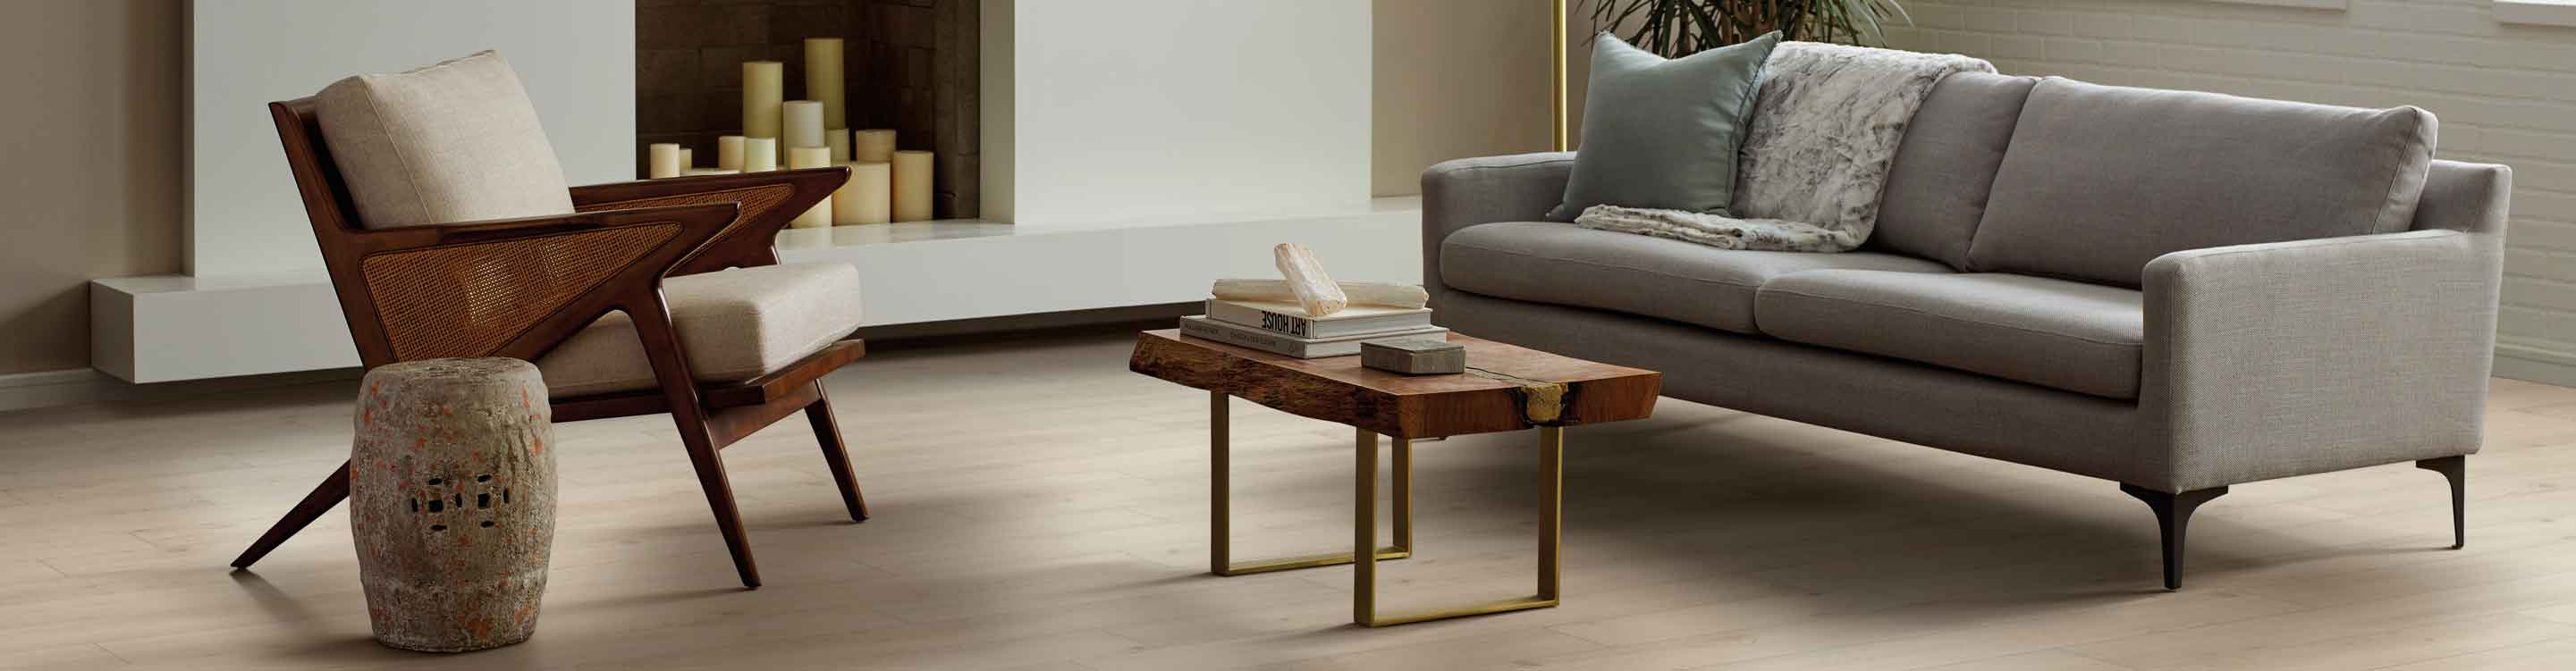 Luxury vinyl plank in living room